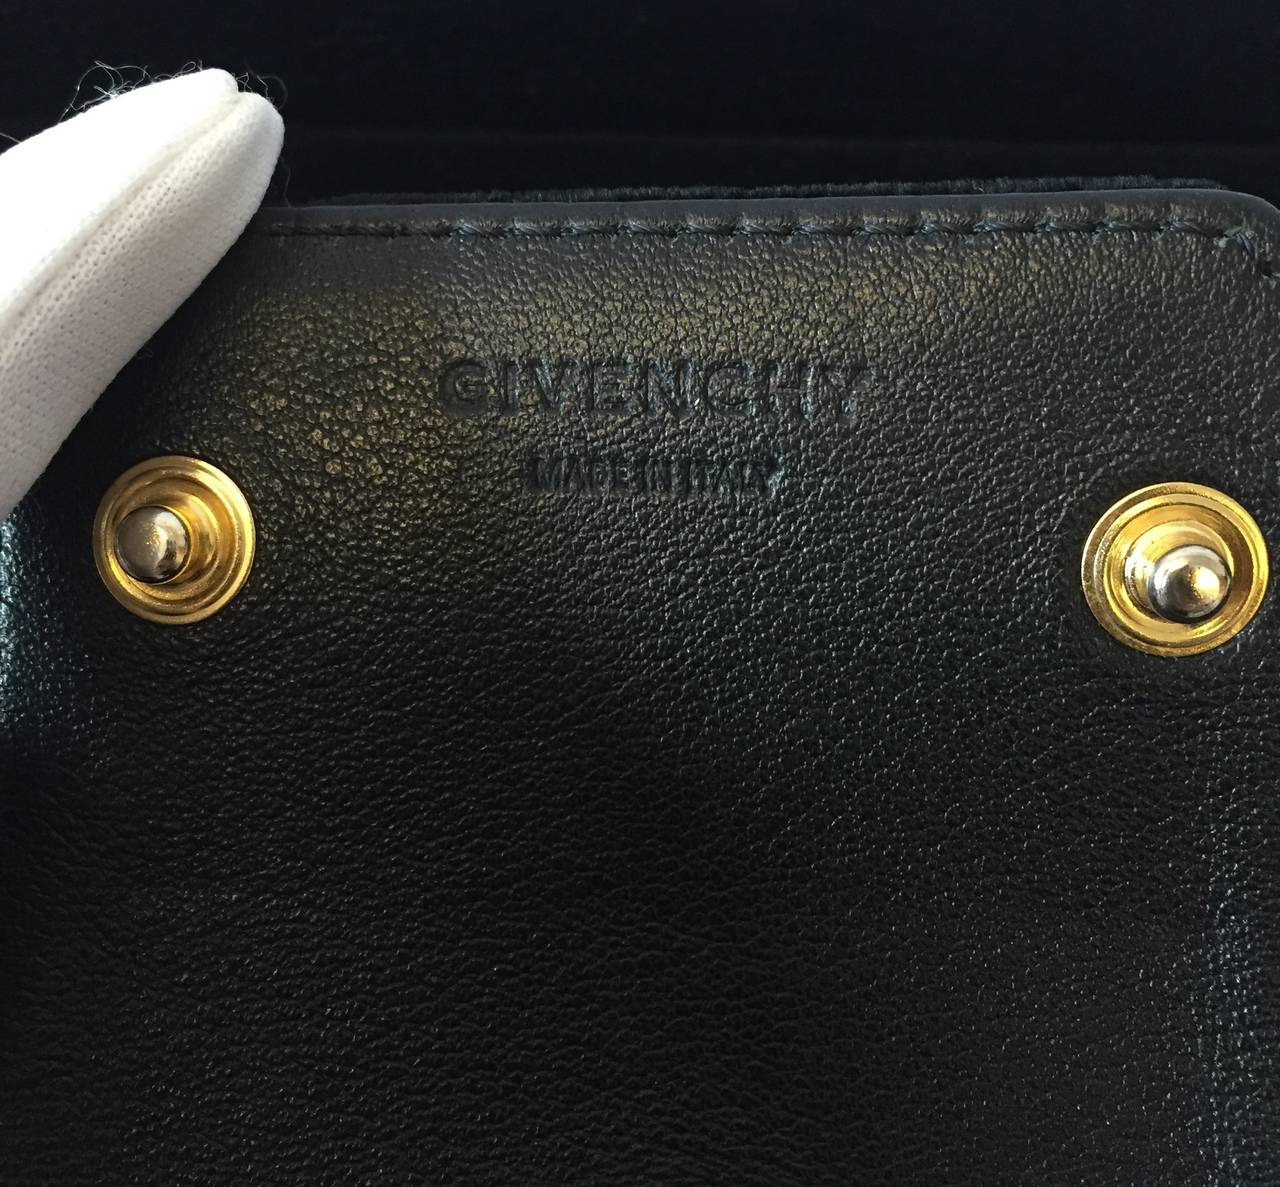 Givenchy wide cuff bracelet. Goldtone metal studs, black velvet body, black leather backing, snaps shut, 'Givenchy' logo stamped on interior. Measures 3 1/4